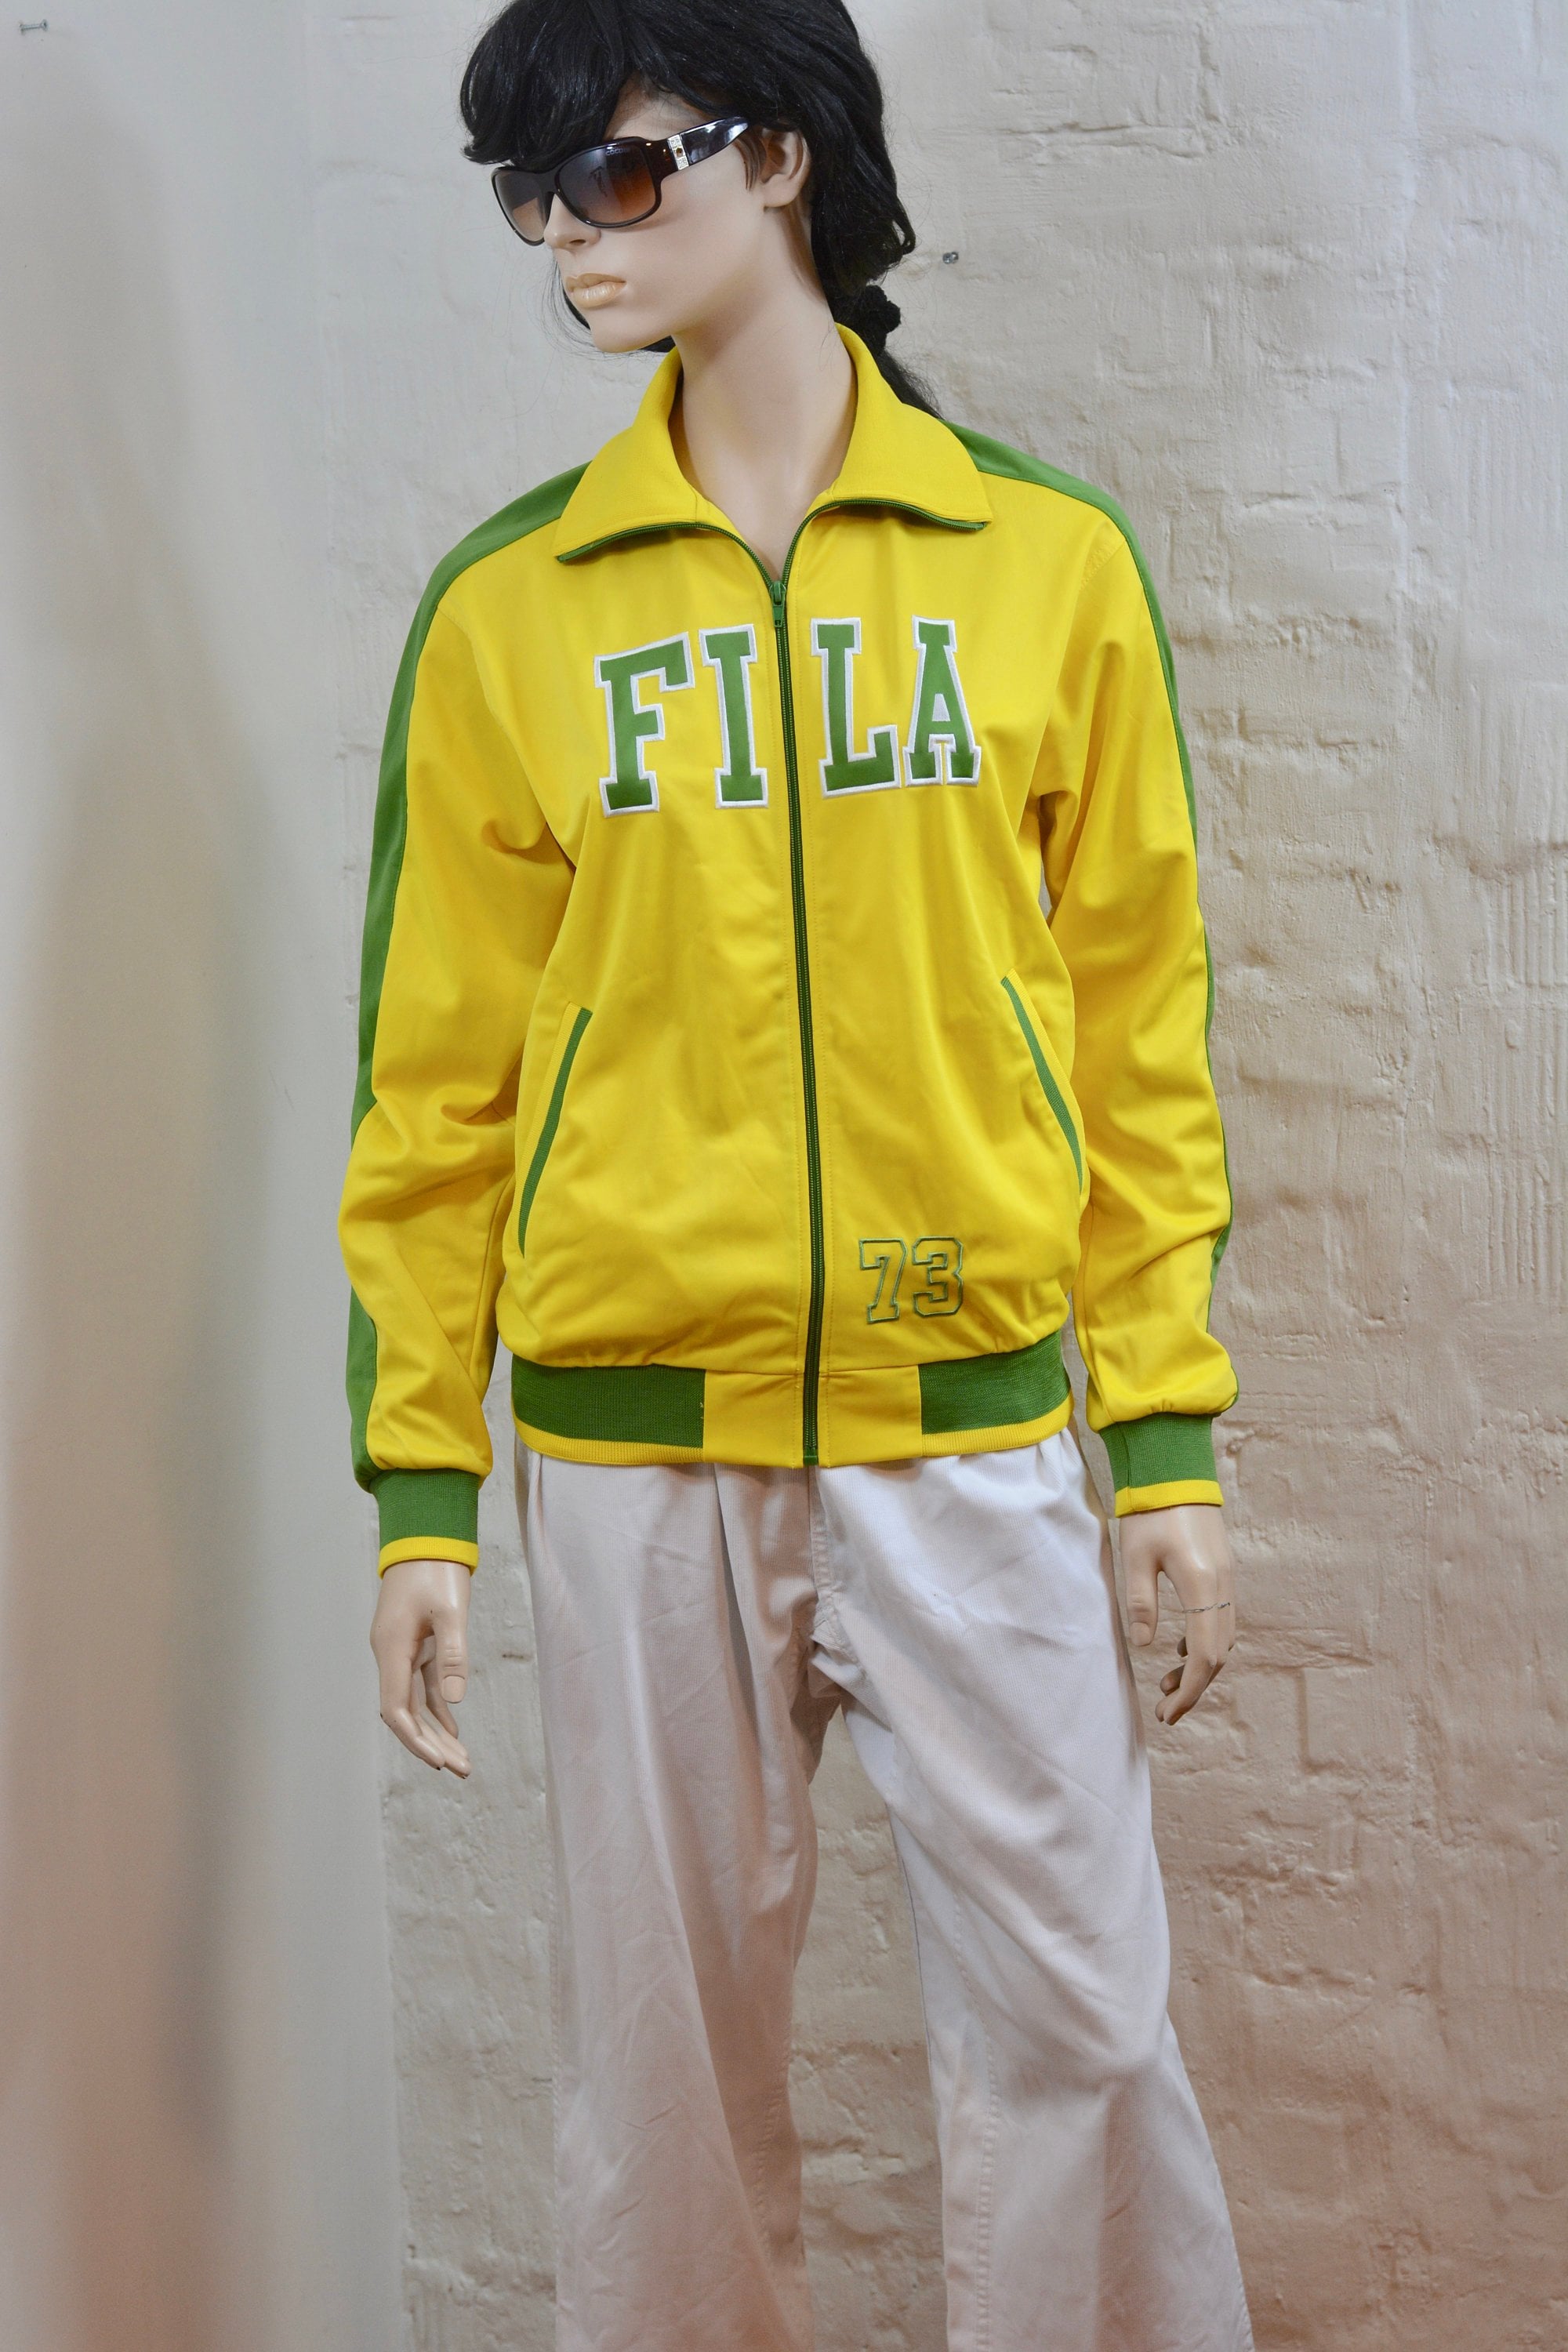 Gammel mand Jeg vasker mit tøj Individualitet FILA Sports Jacket Yellow/ Green Colour Block Hipster Jacket | Etsy